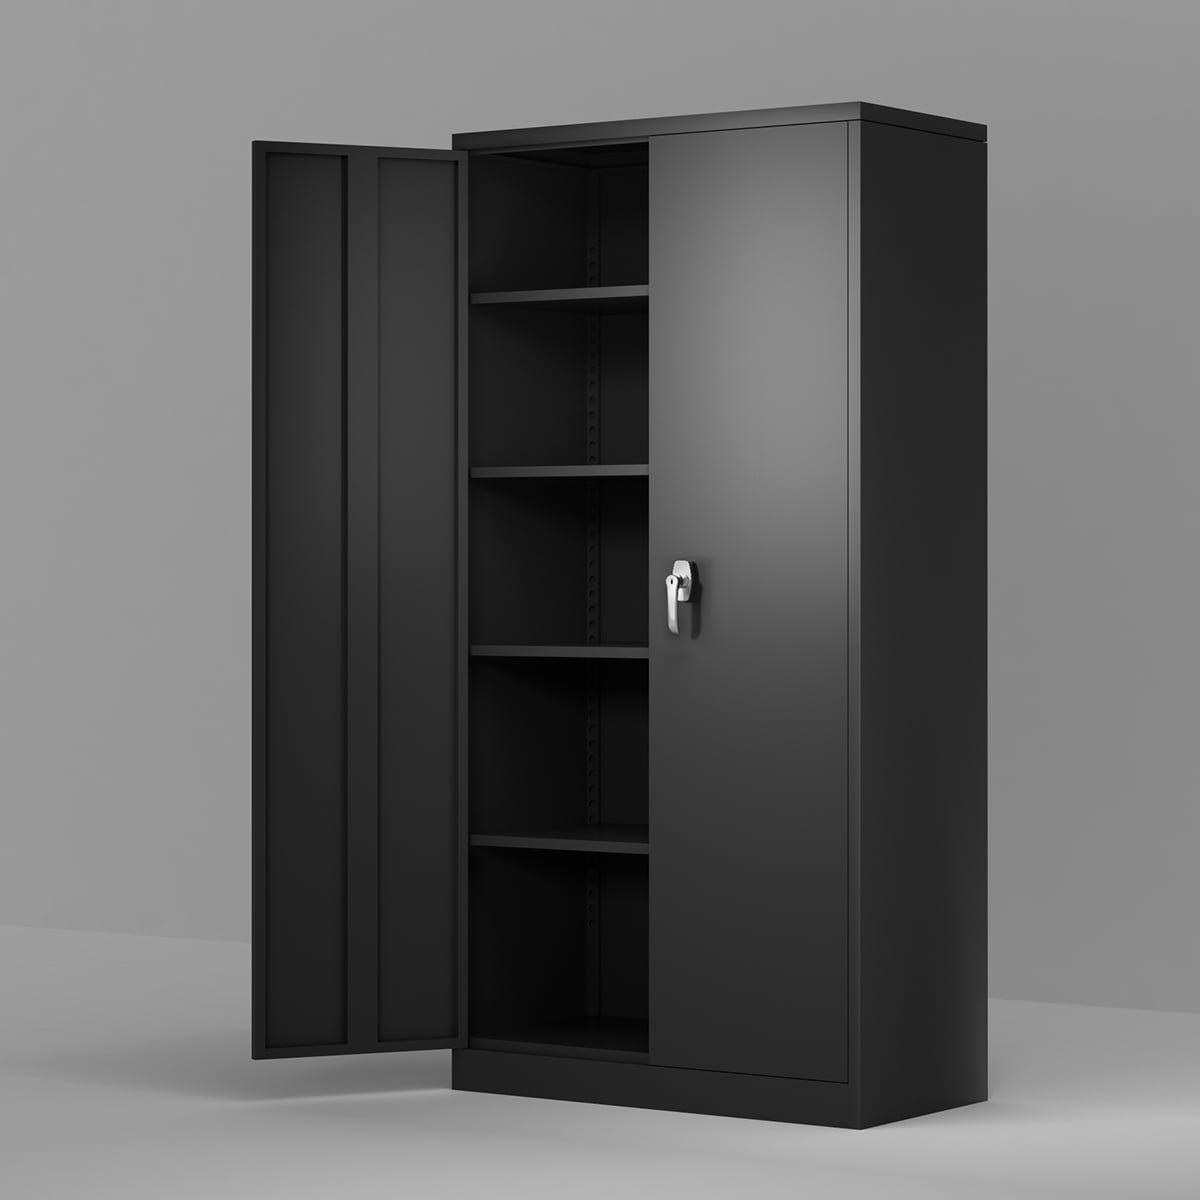 Details about   Metal Office Storage Filing Cabinet Lockable Wardrobe Cupboard with Sliding Door 